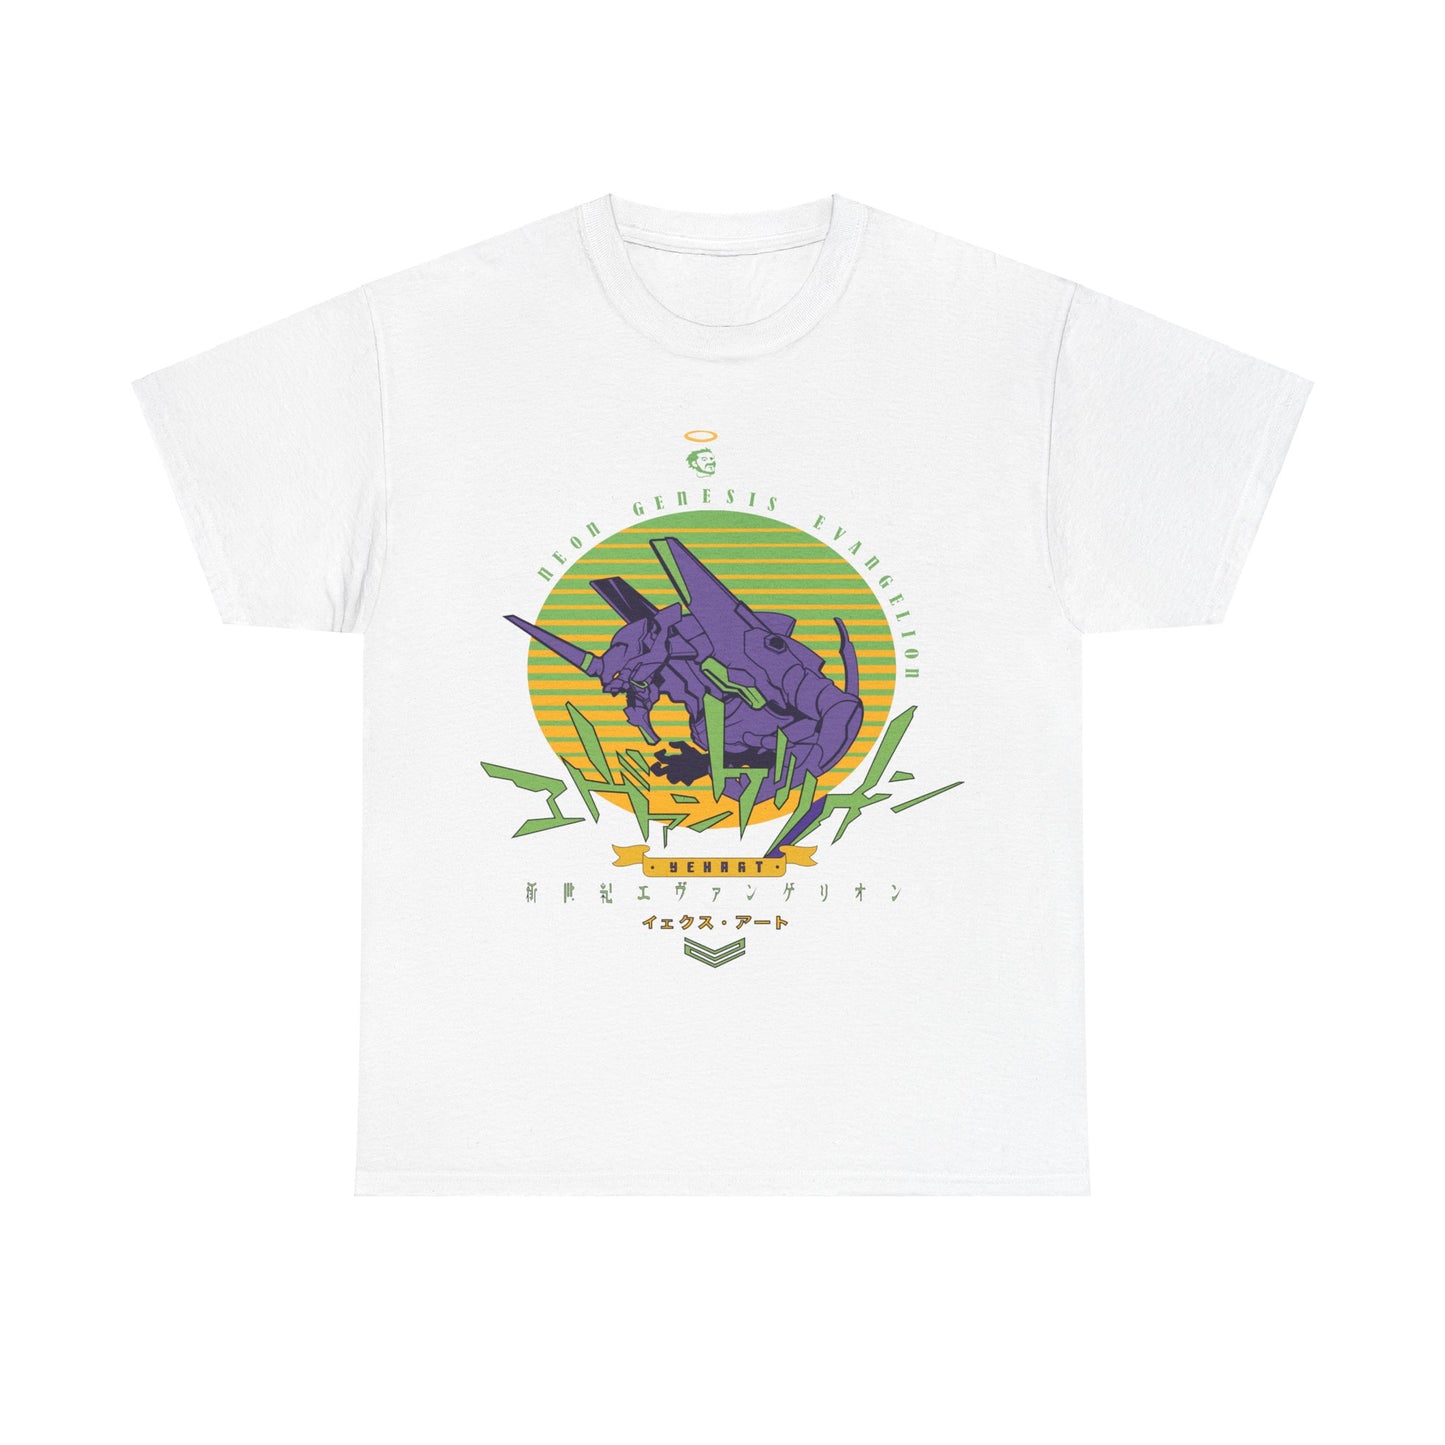 Evangelion Unit-01 (Eva-01) Regular T-shirt - Neon Genesis Evangelion